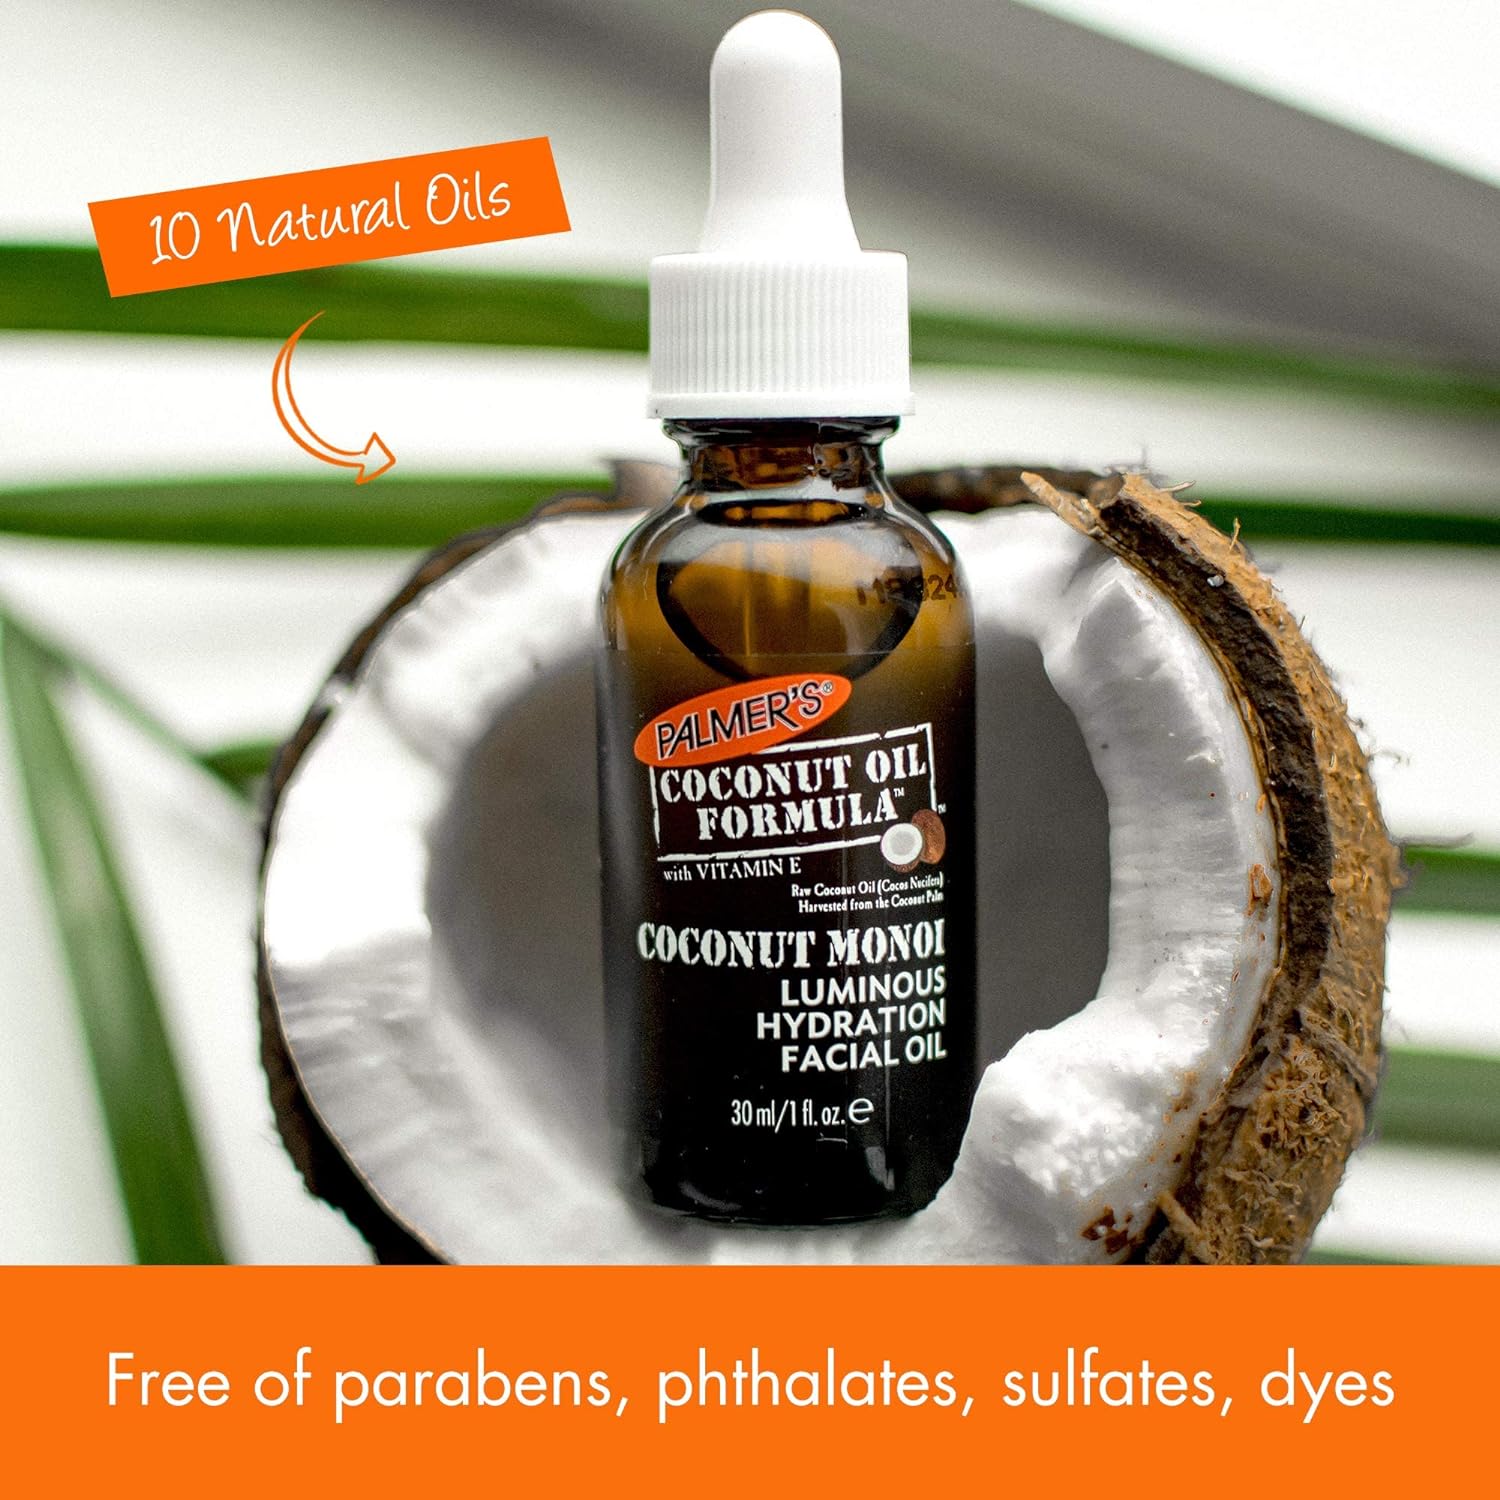 Palmer’s Coconut Oil Formula Coconut Monoi Luminous Hydration Facial Oil, 1 Ounce : Beauty & Personal Care